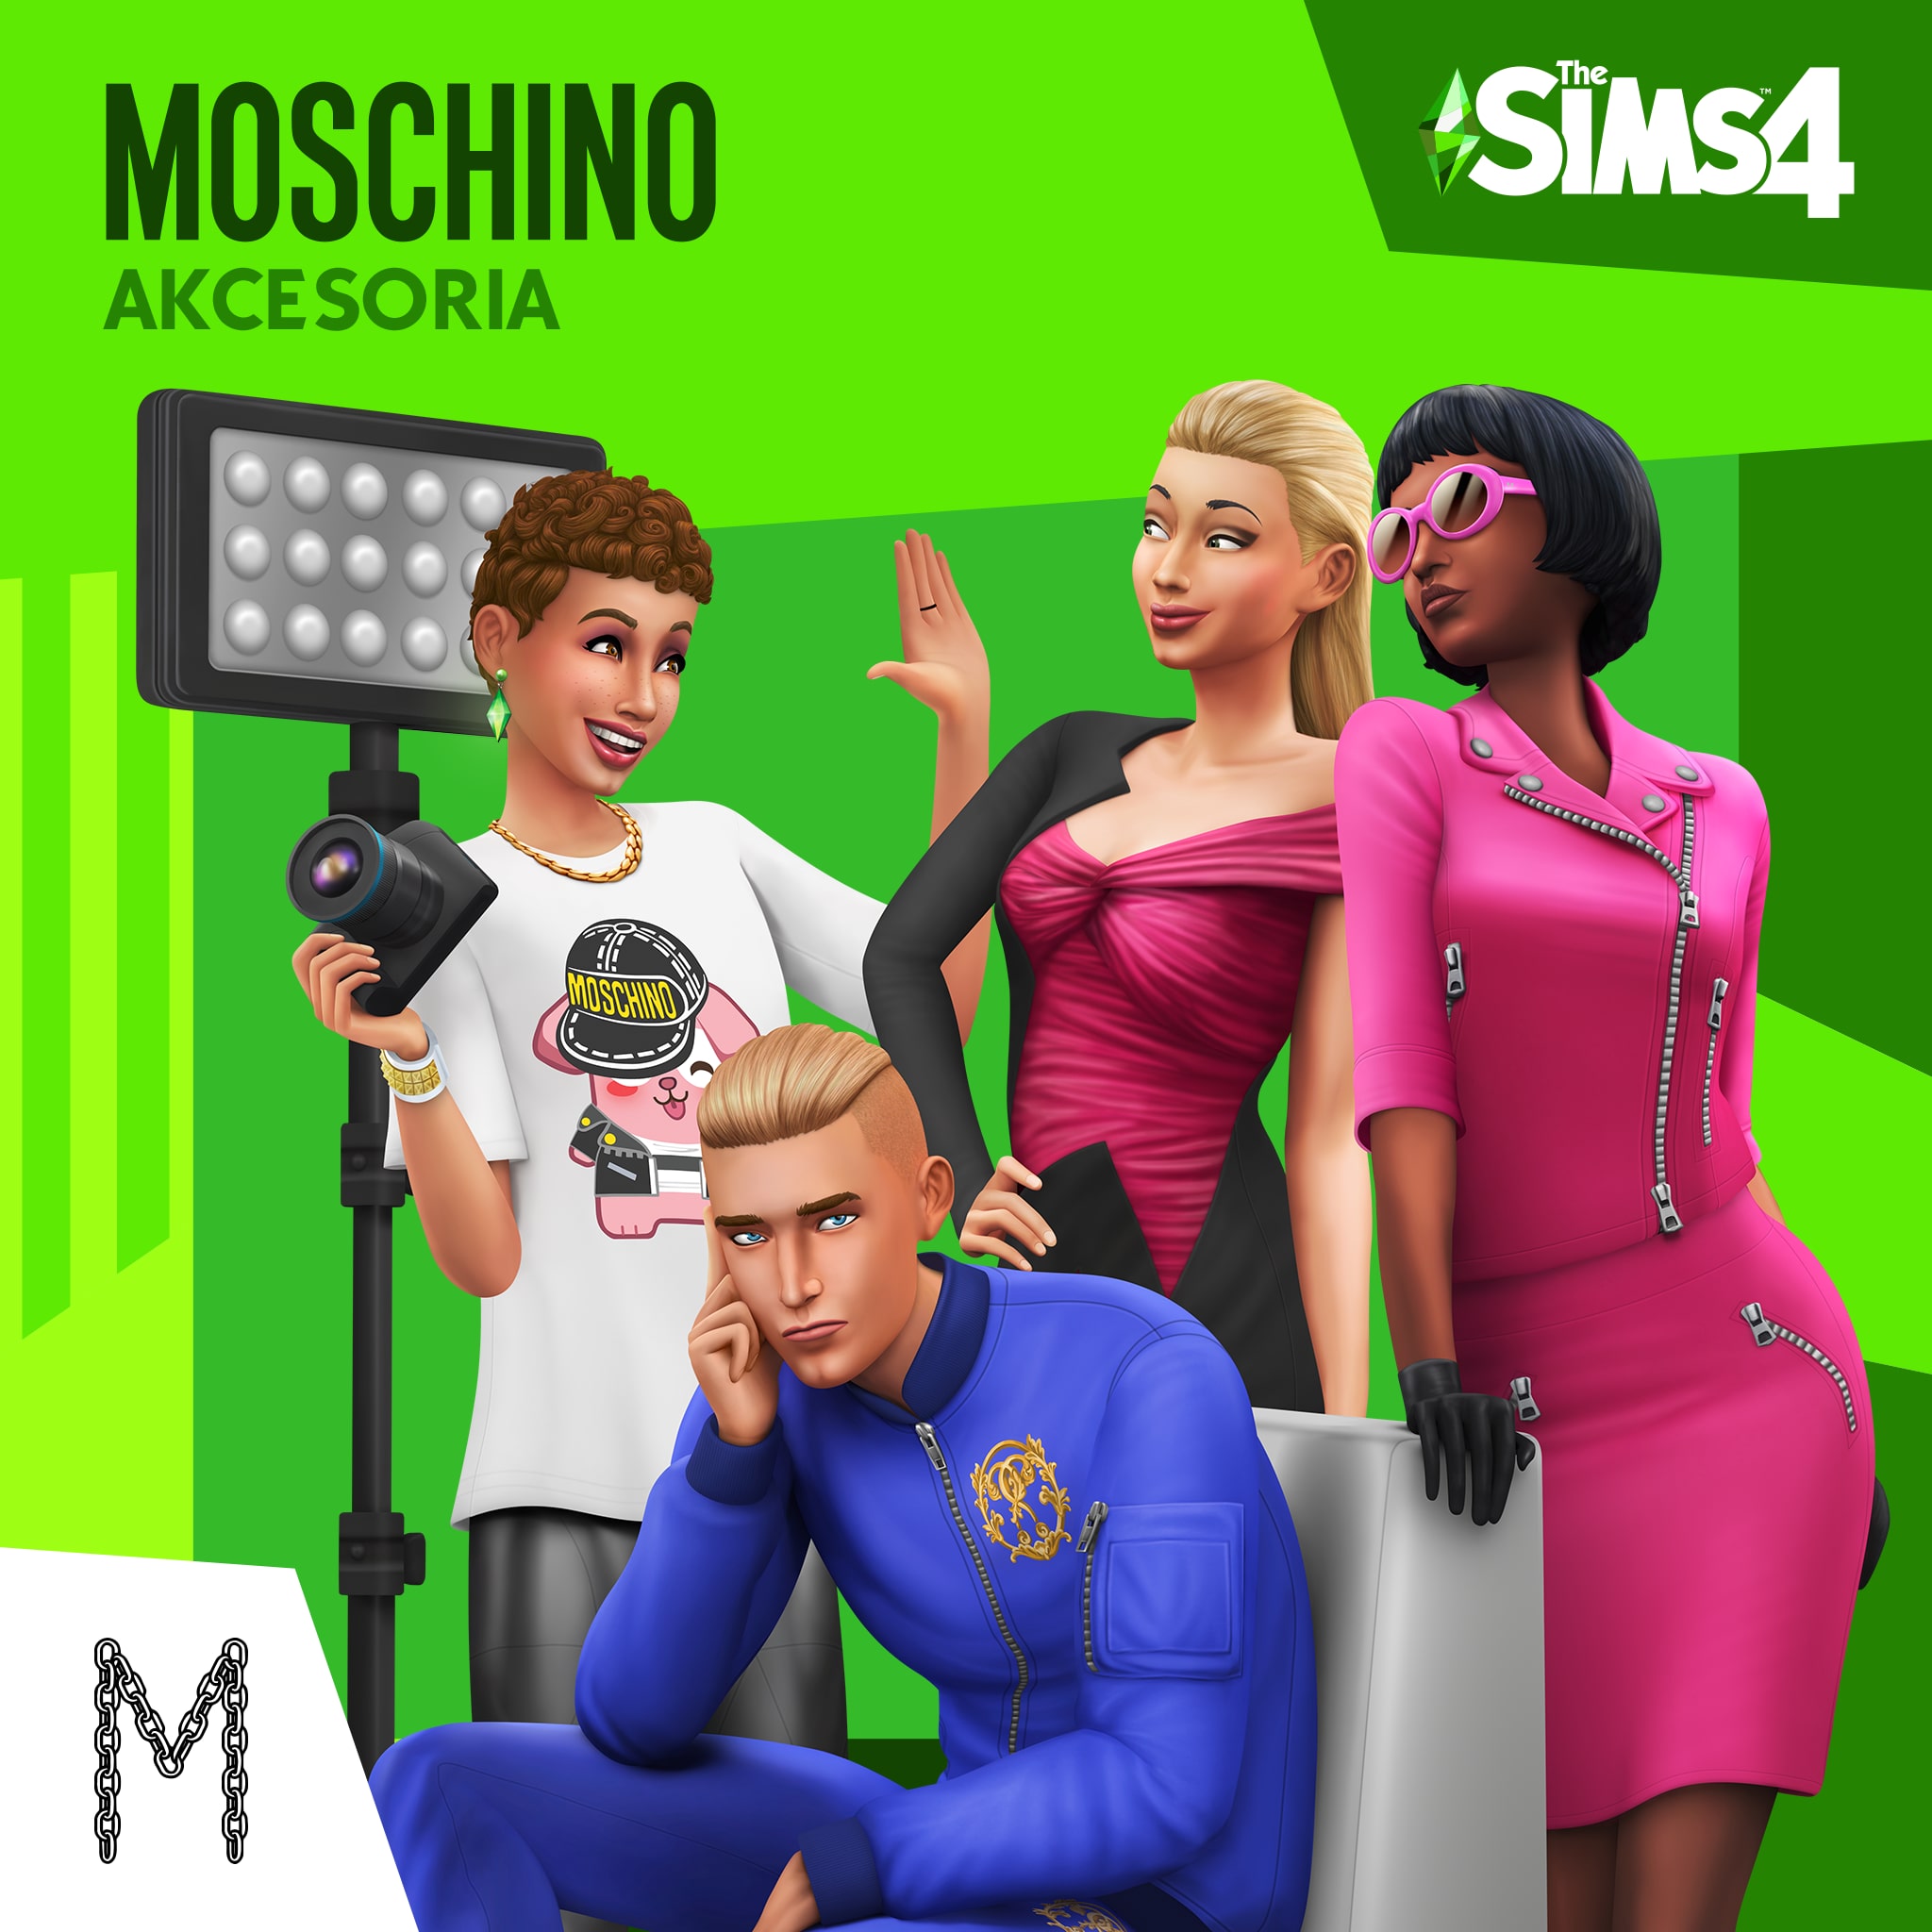 The Sims 4™ Moschino Akcesoria